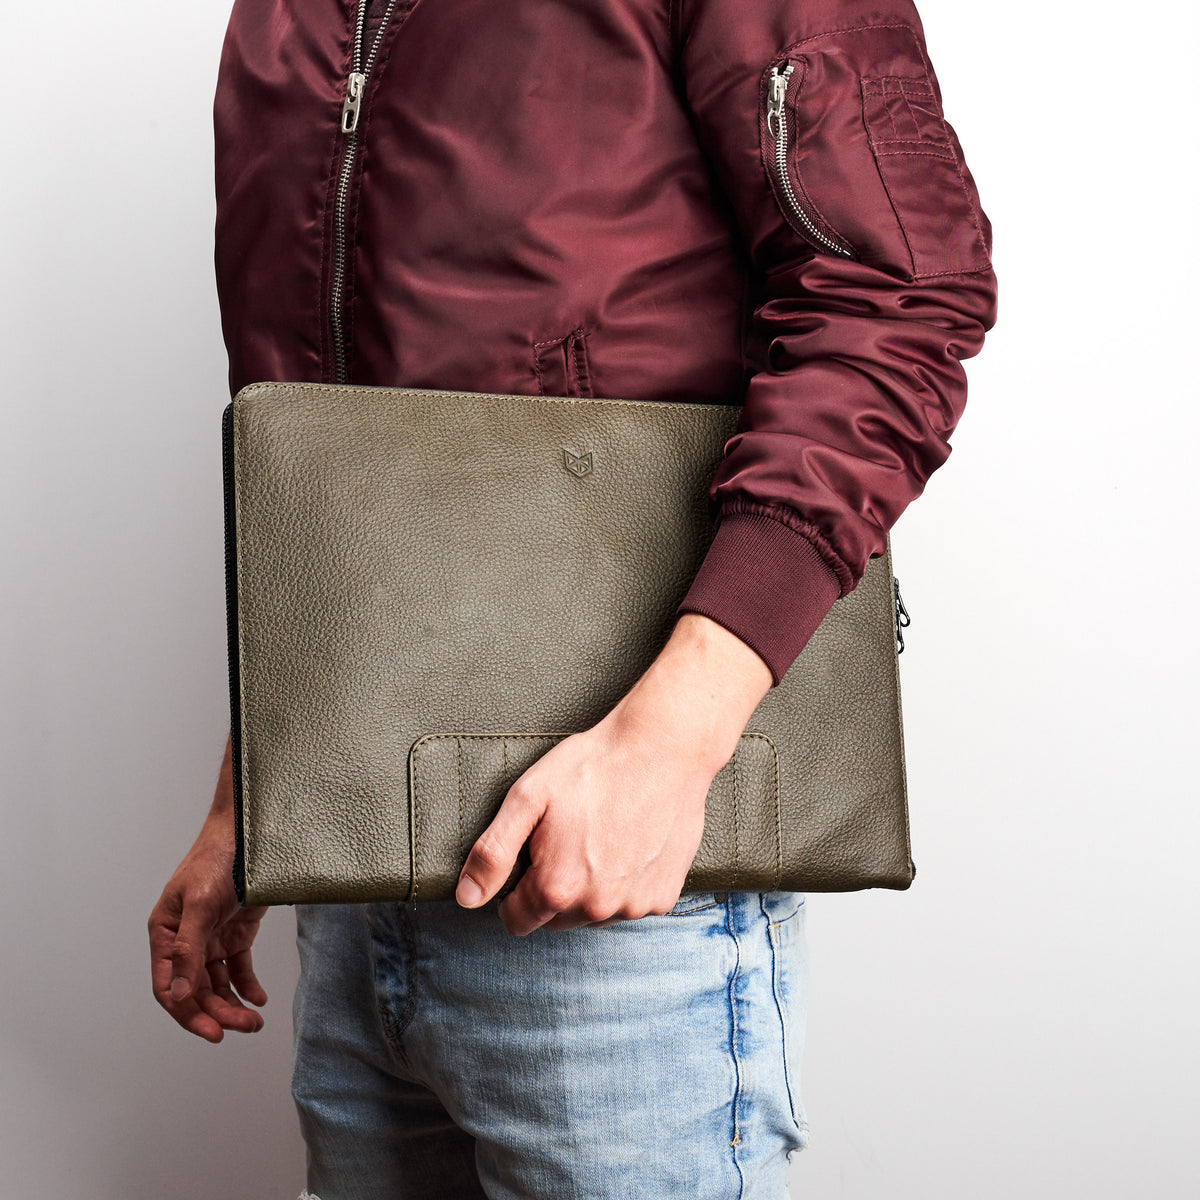 Mens style accessories. Green Leather Laptop Portfolio Case. Laptops &amp; devices Bag.